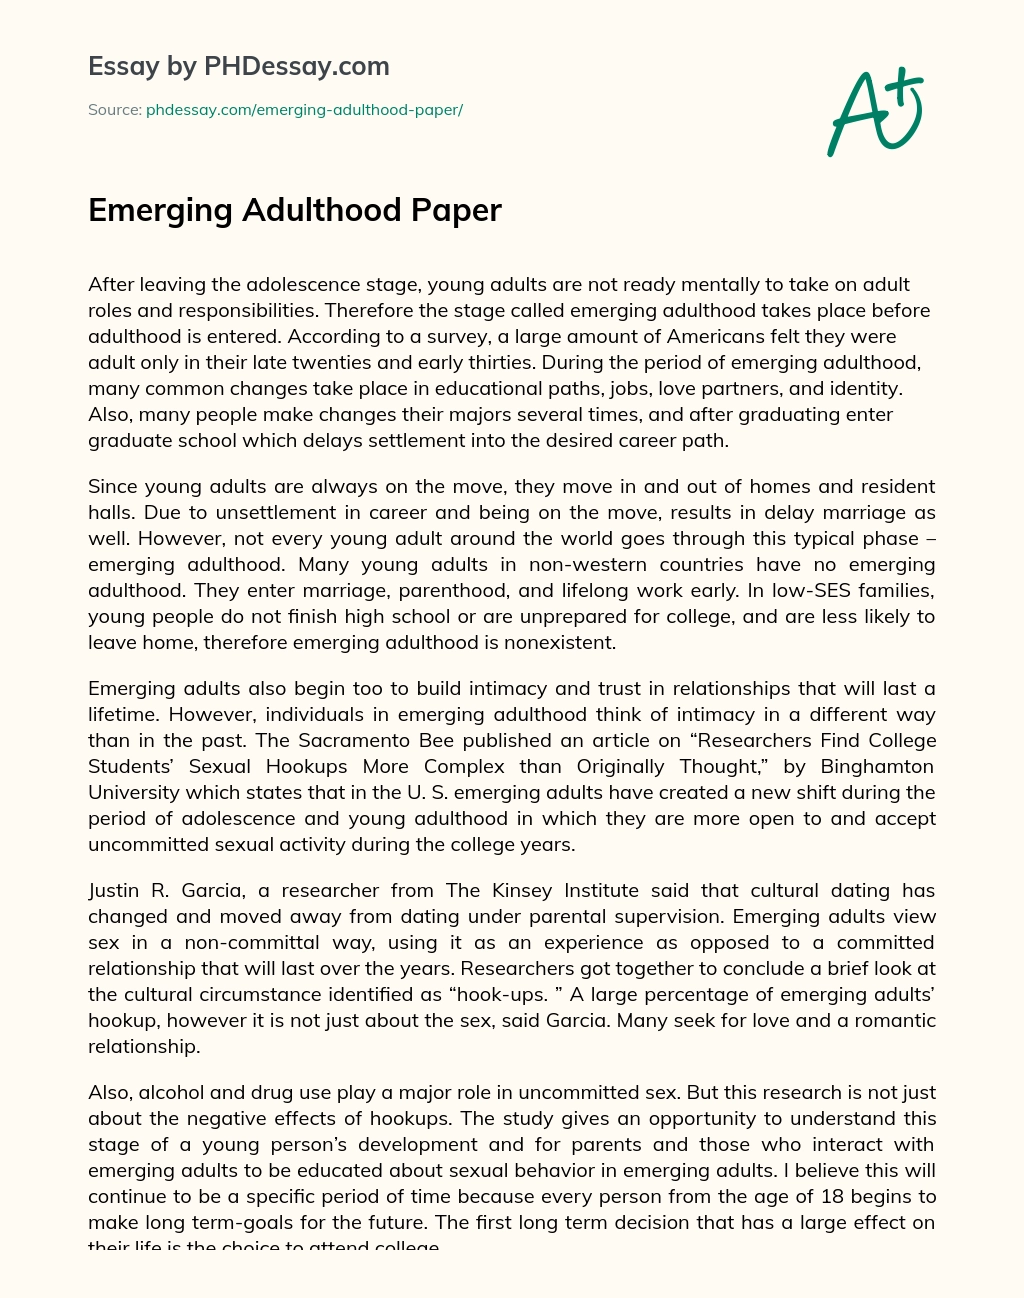 Emerging Adulthood Paper essay